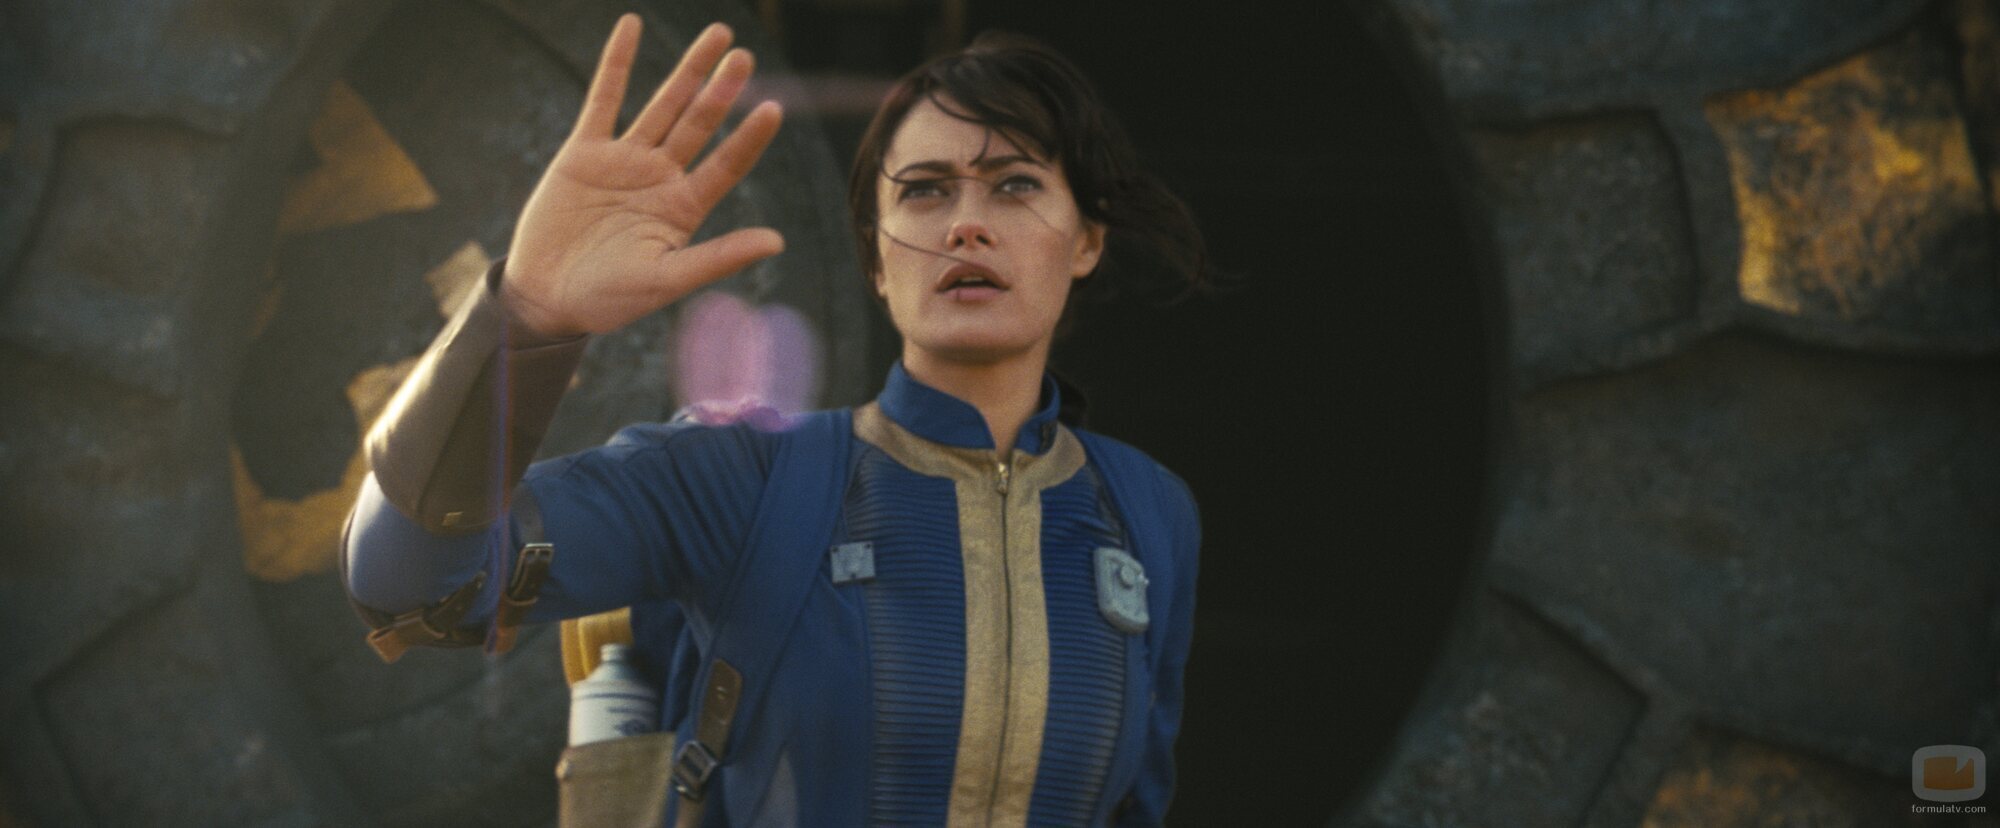 Ella Purnell es Lucy en 'Fallout'